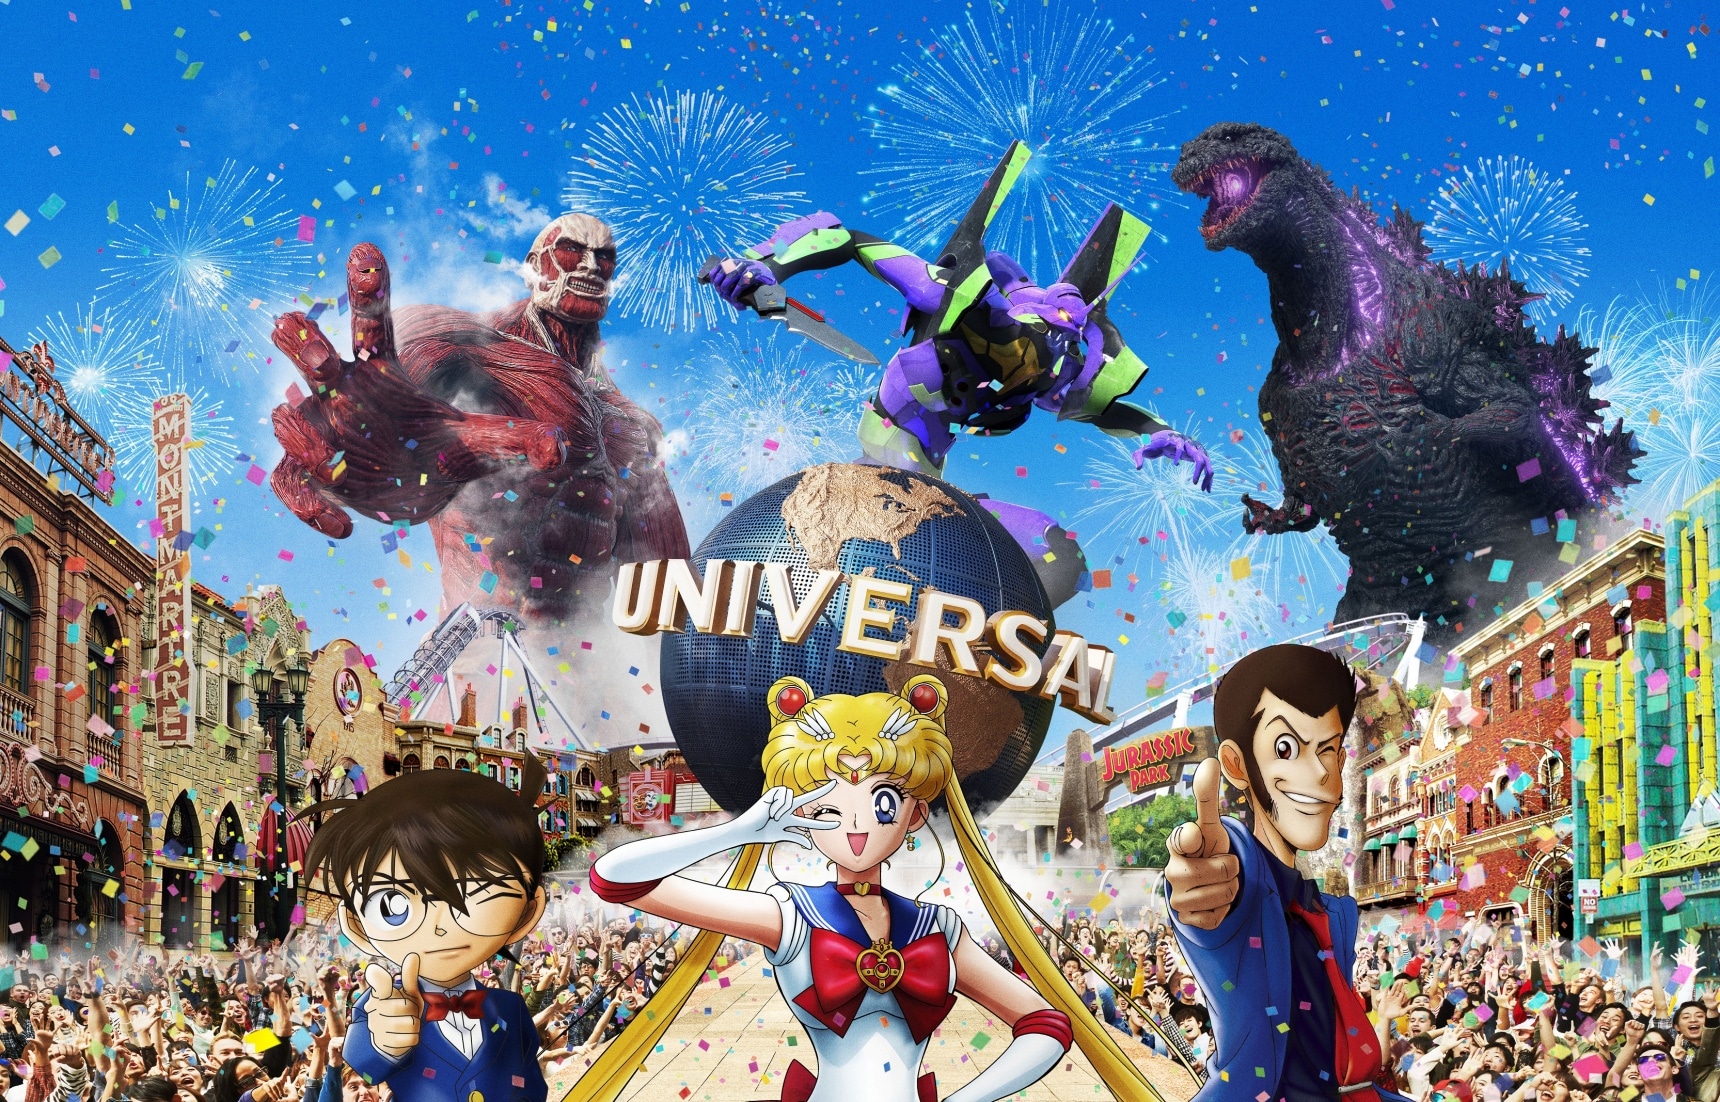 Universal Studios Japan's Haikyu!! Statues are Highly Realistic